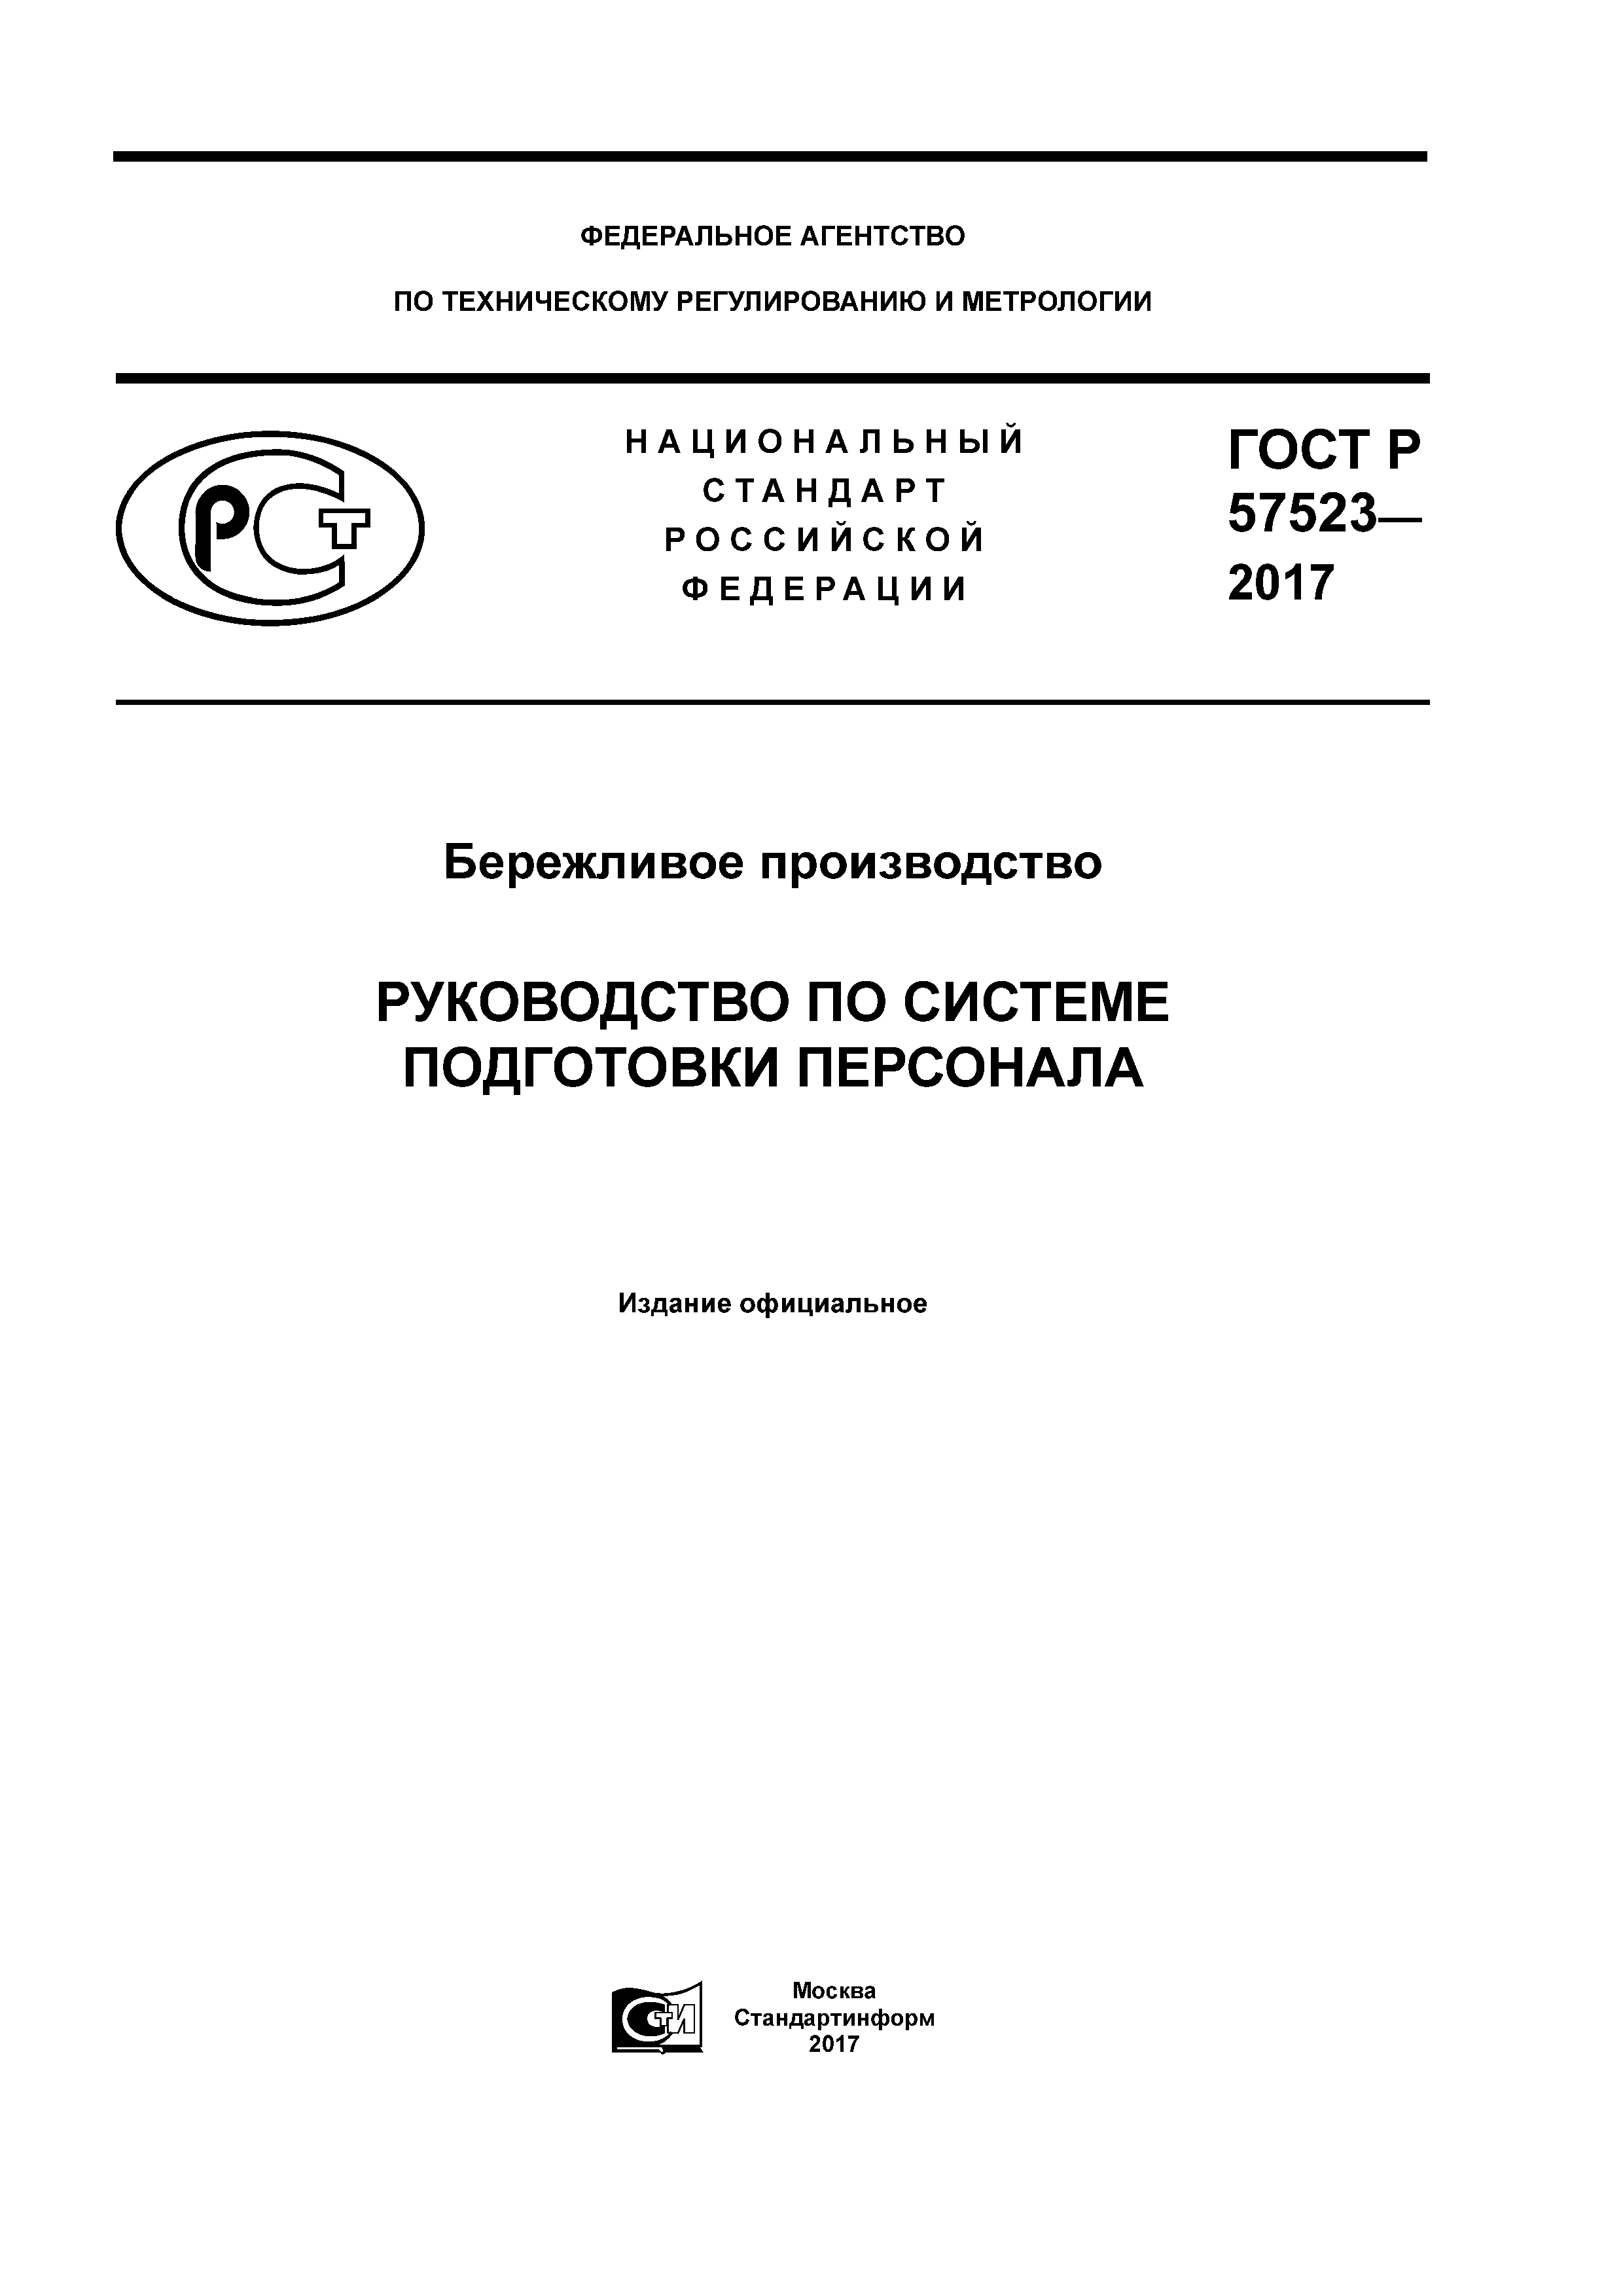 ГОСТ Р 57523-2017